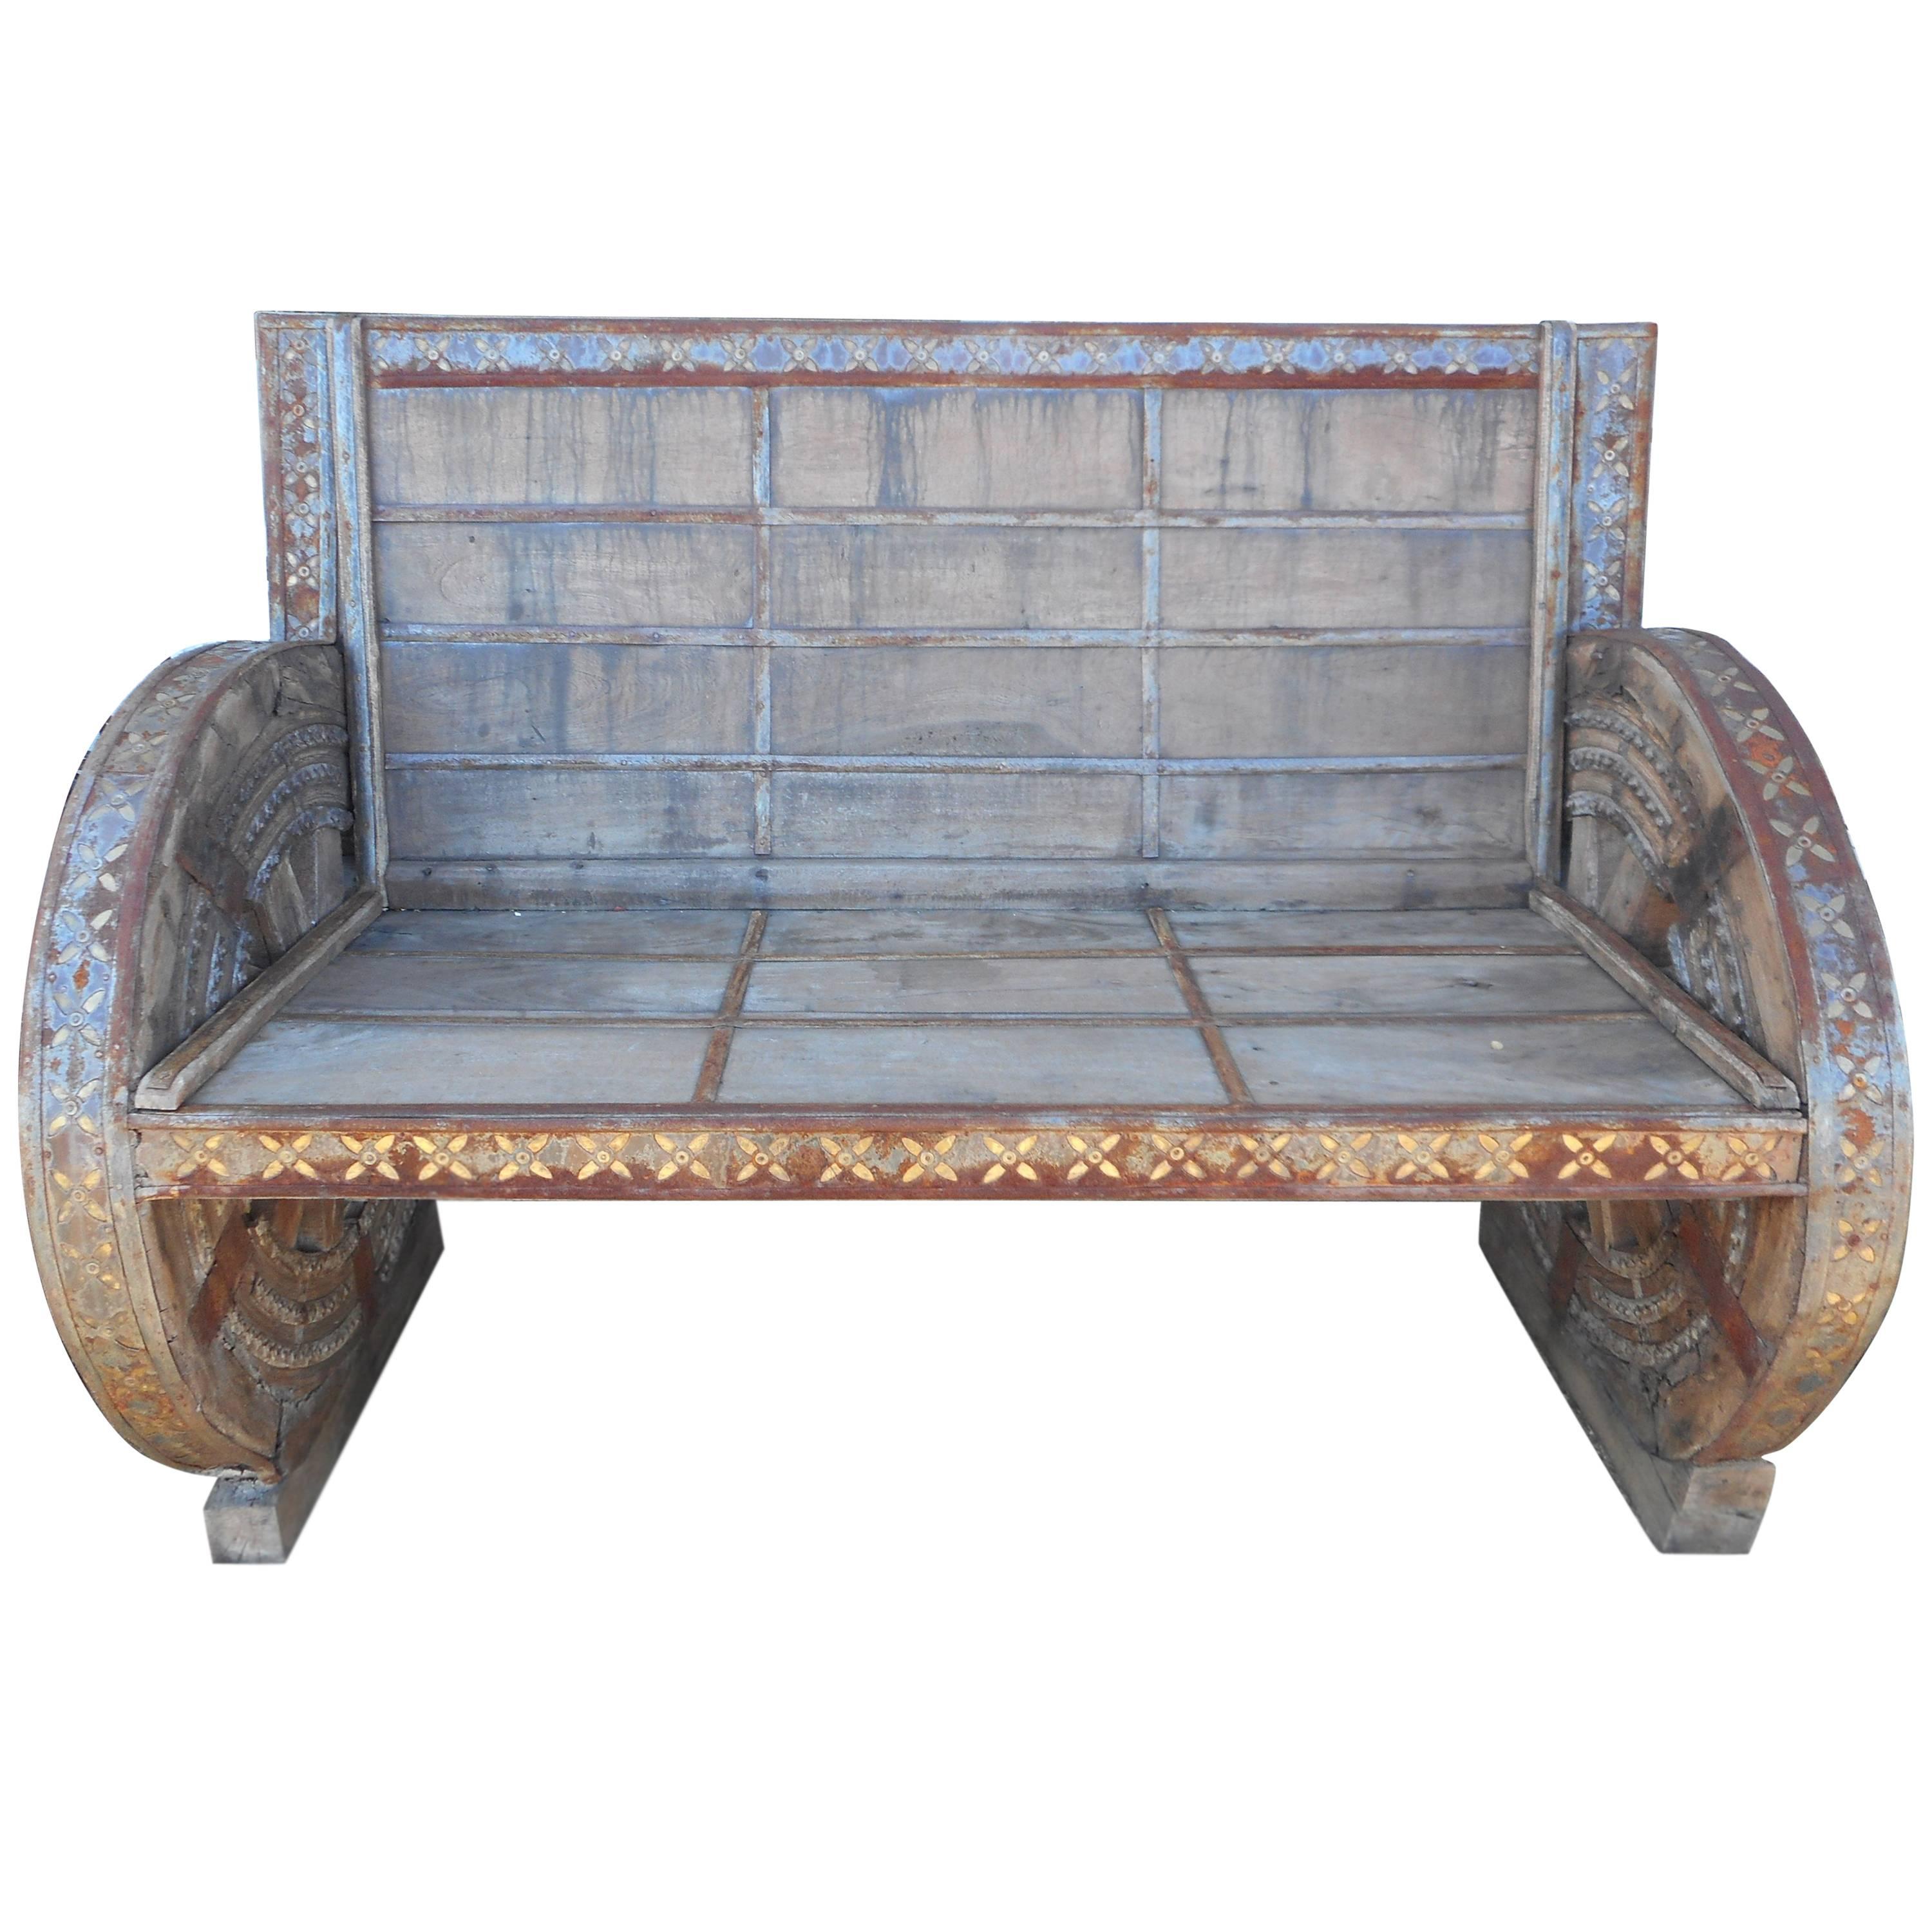 Impressive Vintage Metal and Wood Rustic Bench